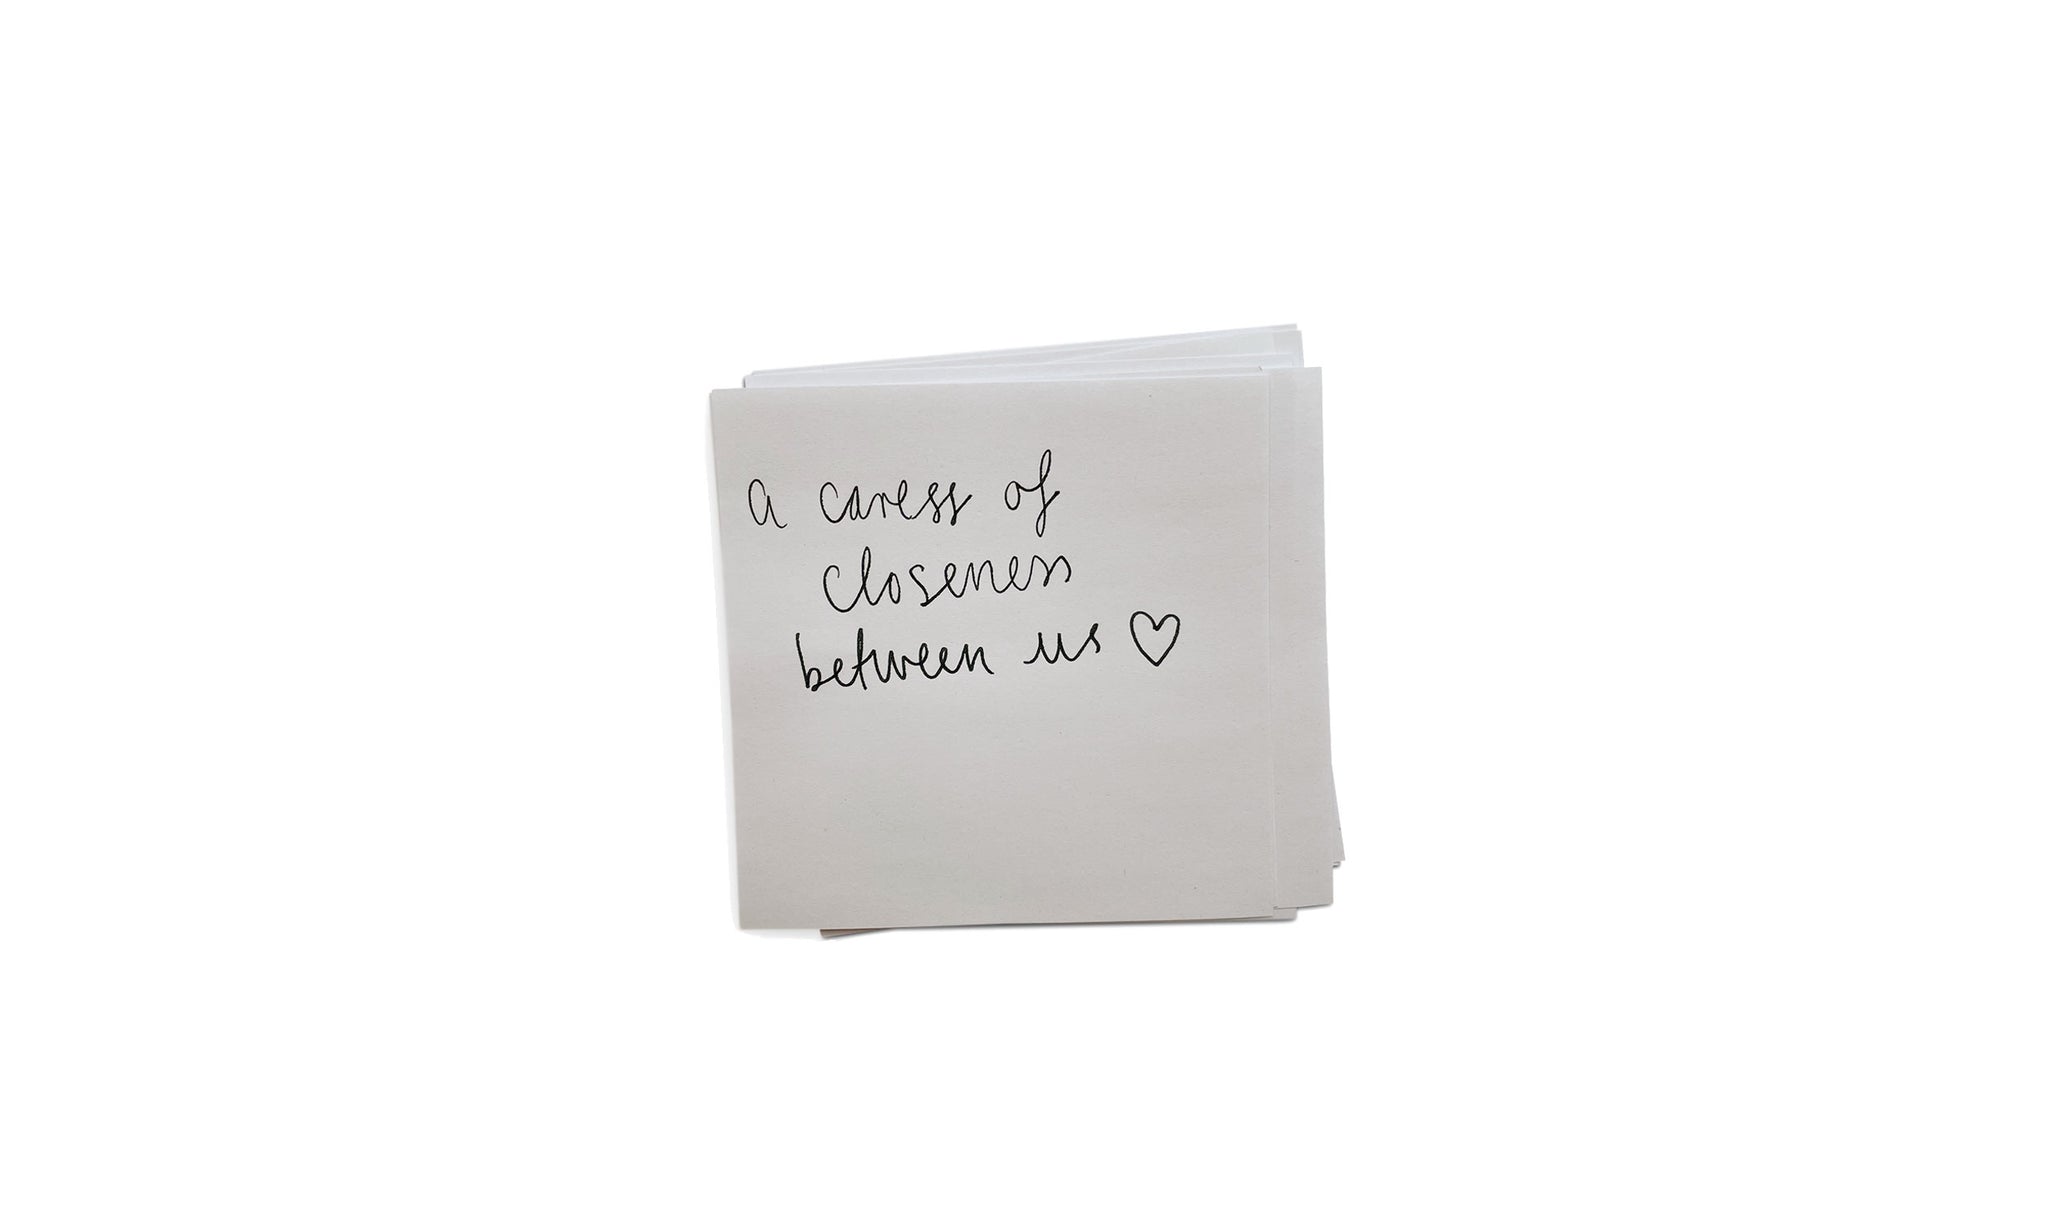 Handwritten note saying A caress of closeness between us